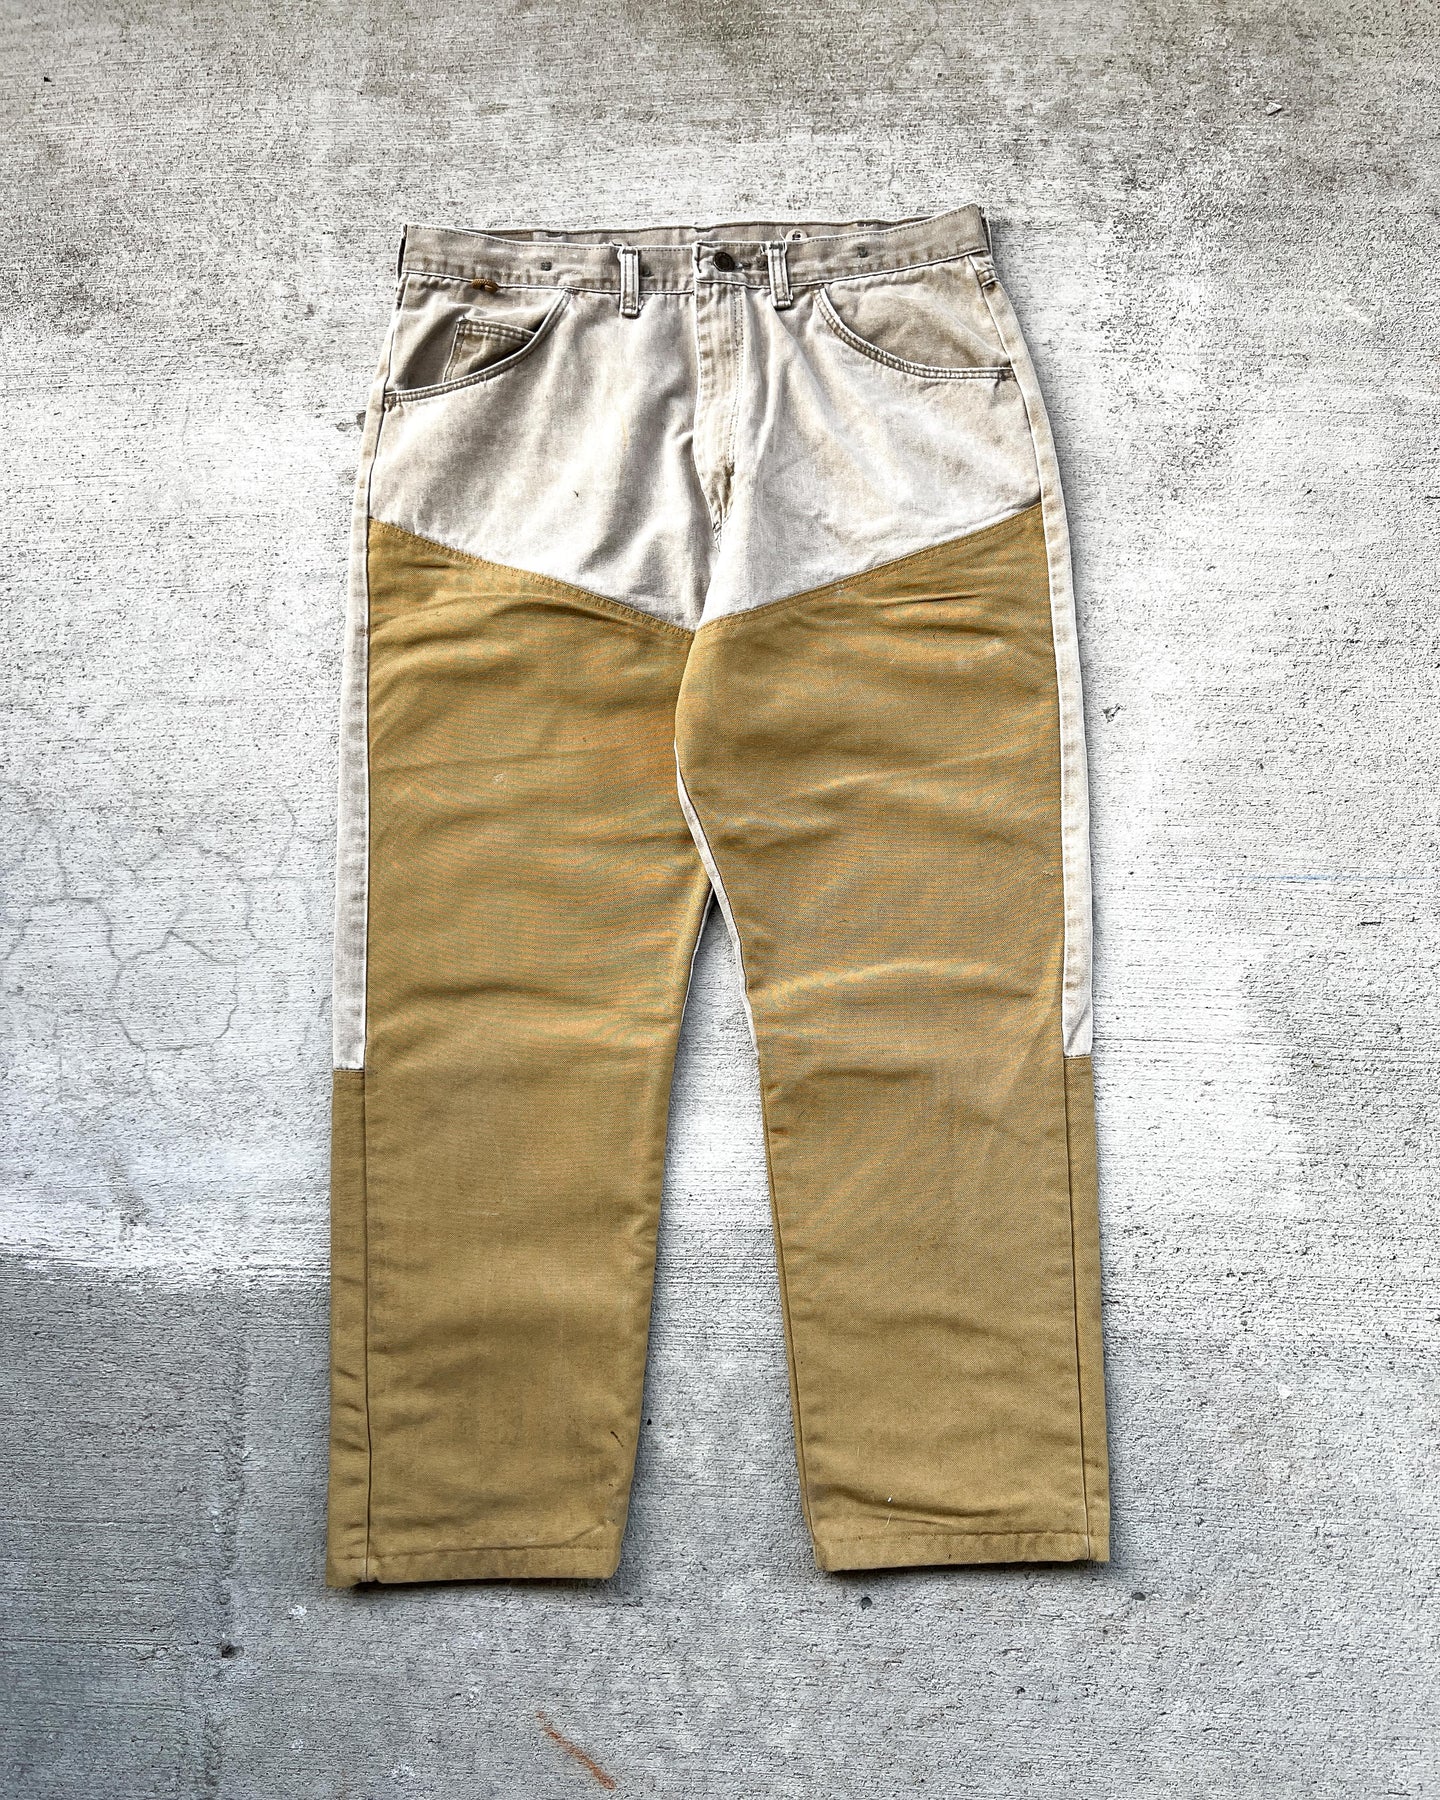 Wrangler Double Knee Hunting Pants - Size 35 x 30